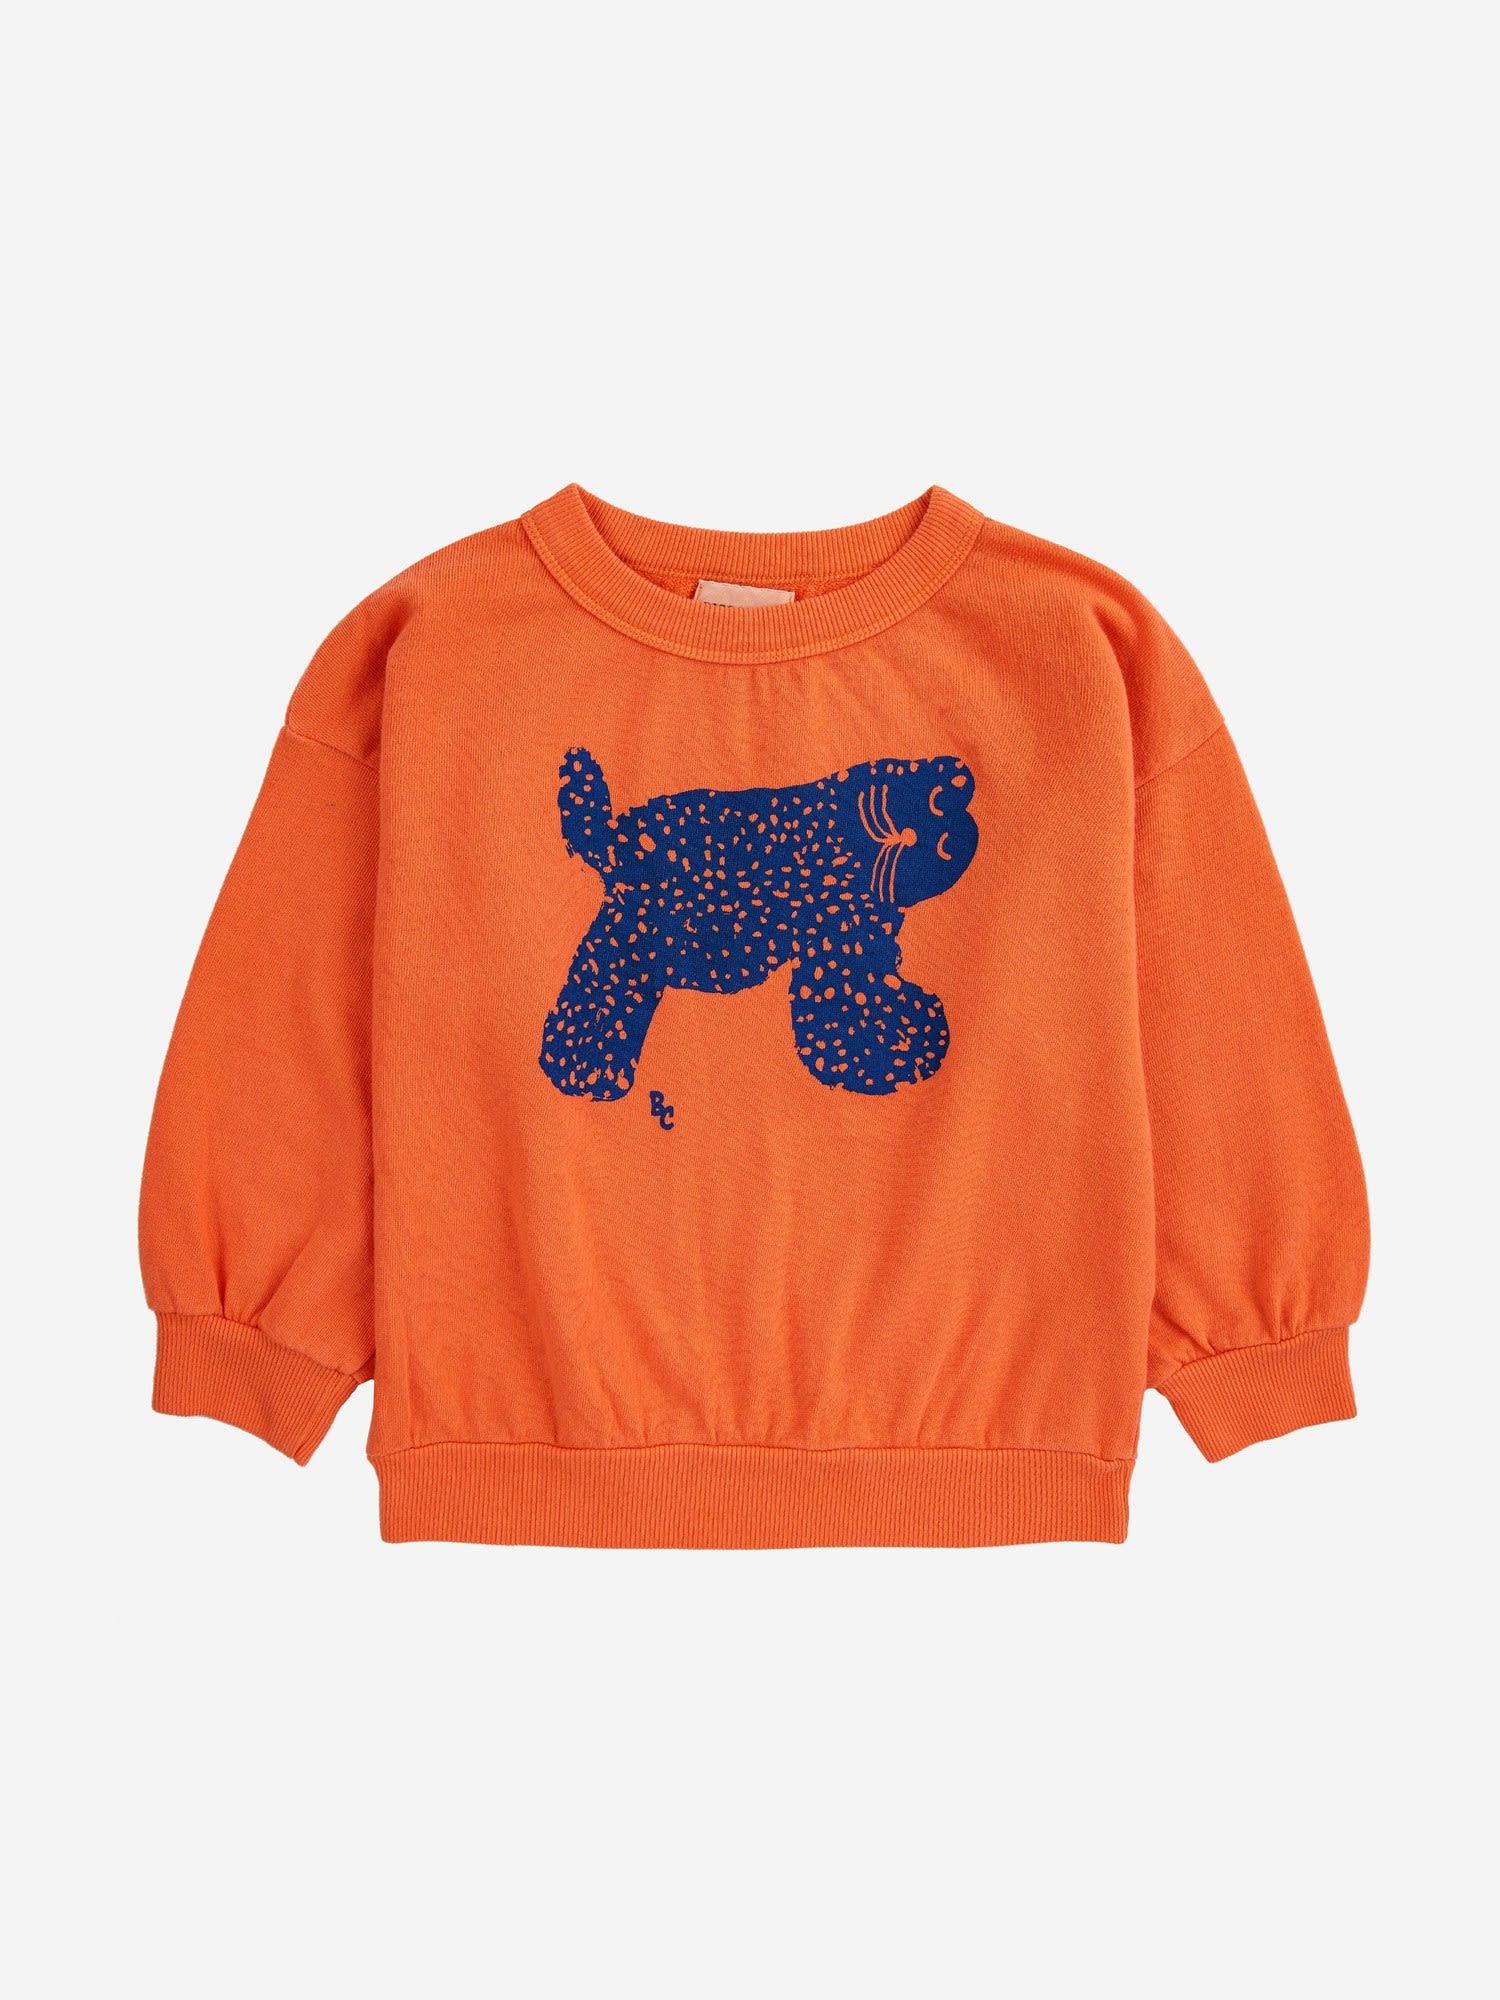 Bobo Choses Orange Sweatshirt For Kids With Cheetah